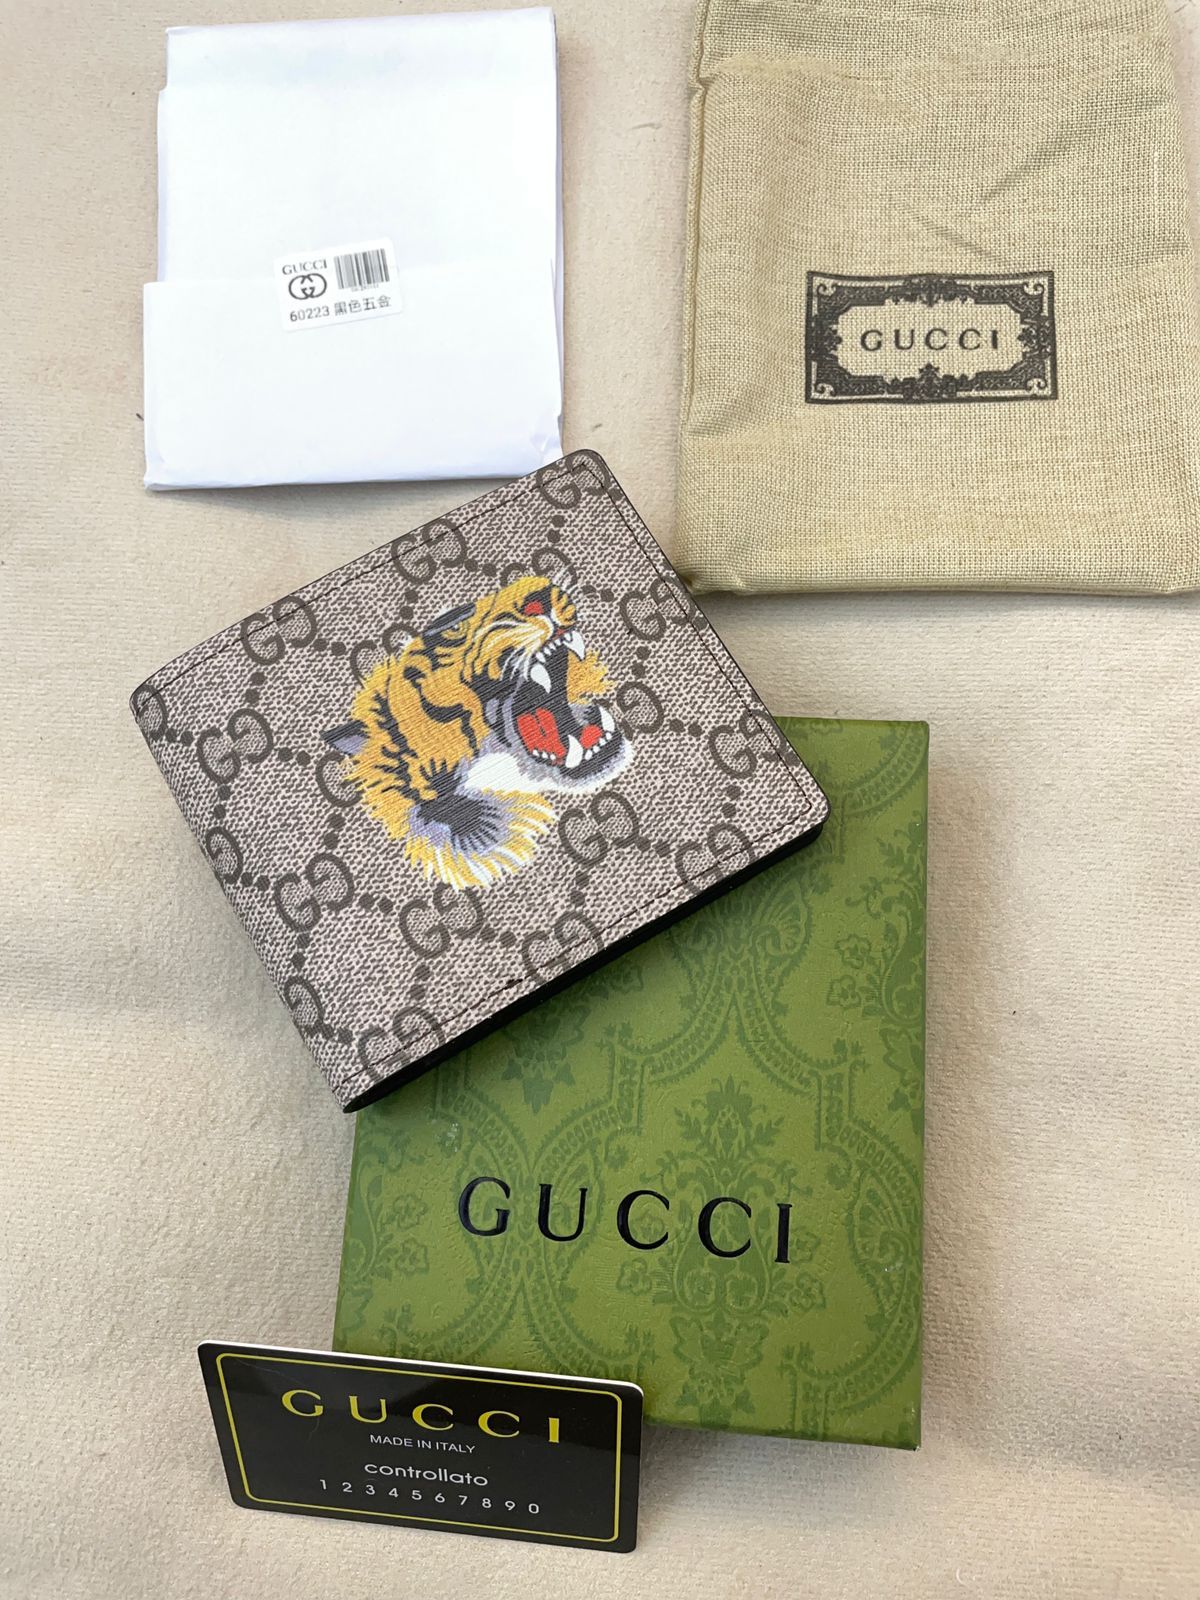 CUG Branded Luxury Italian Leather Men Wallet Model Silk Screen Apricot Tiger 60223070